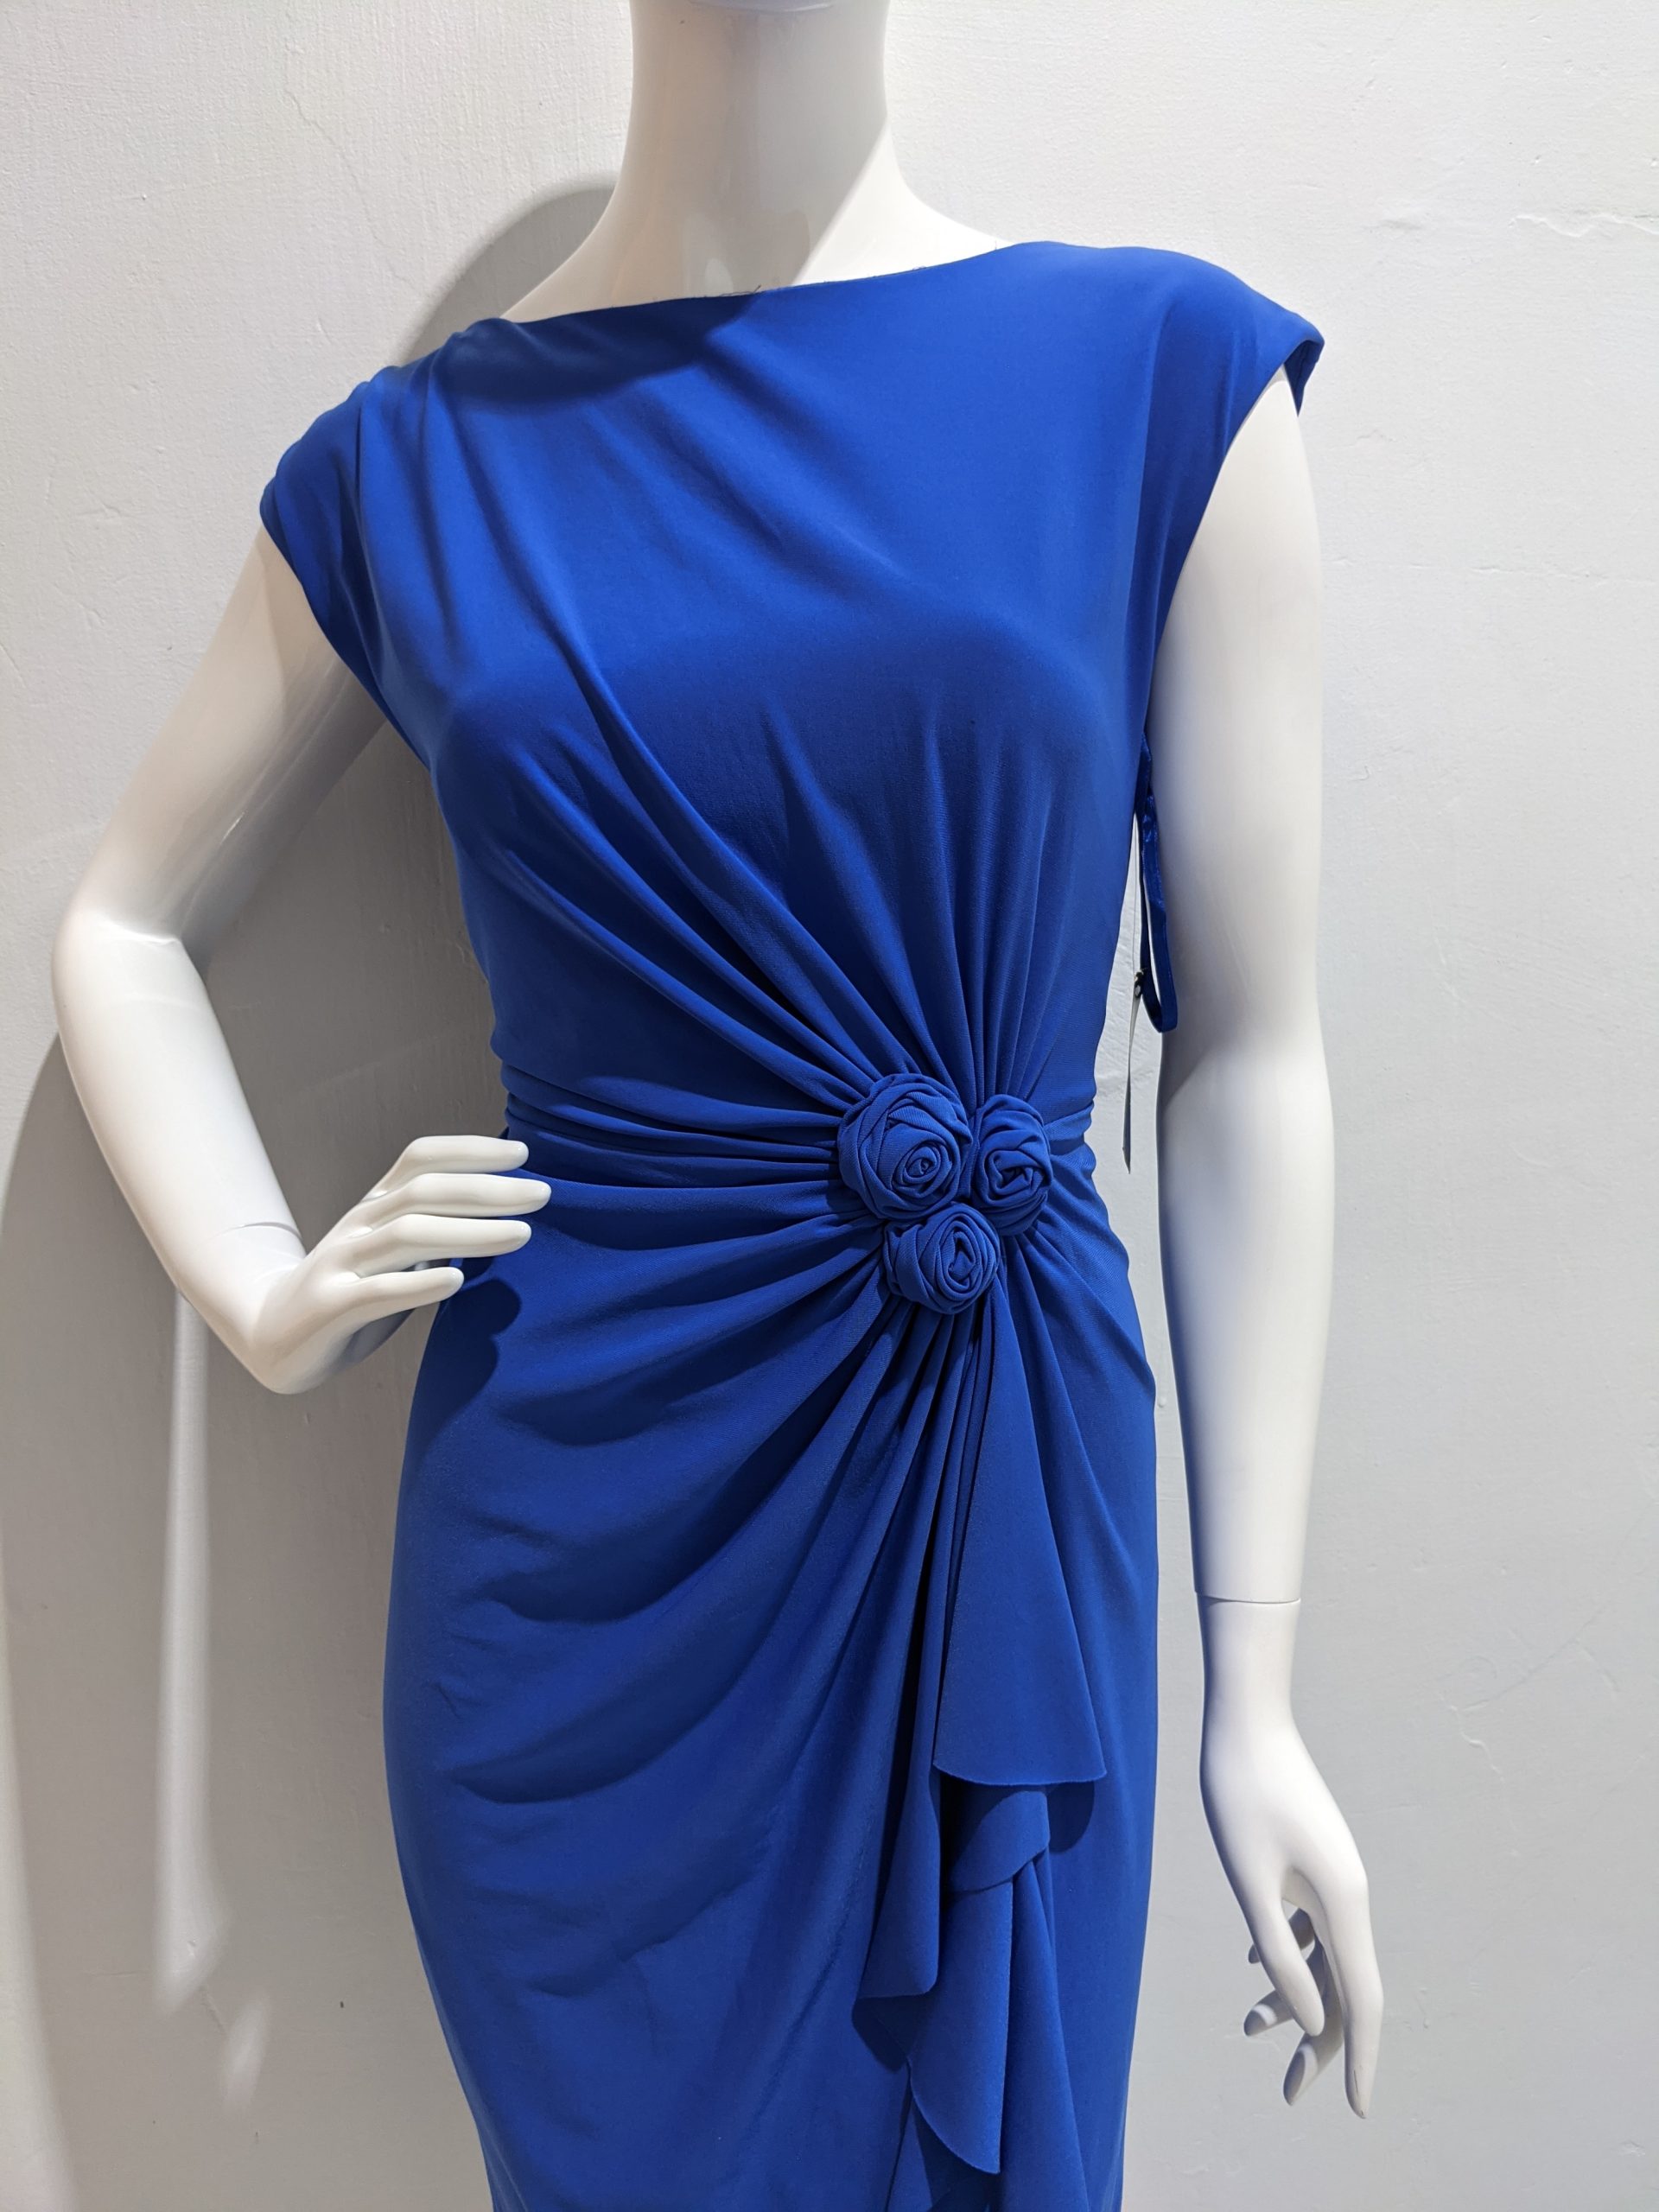 JONES NEW YORK bell sleeveless sheath dress | Listittt.com